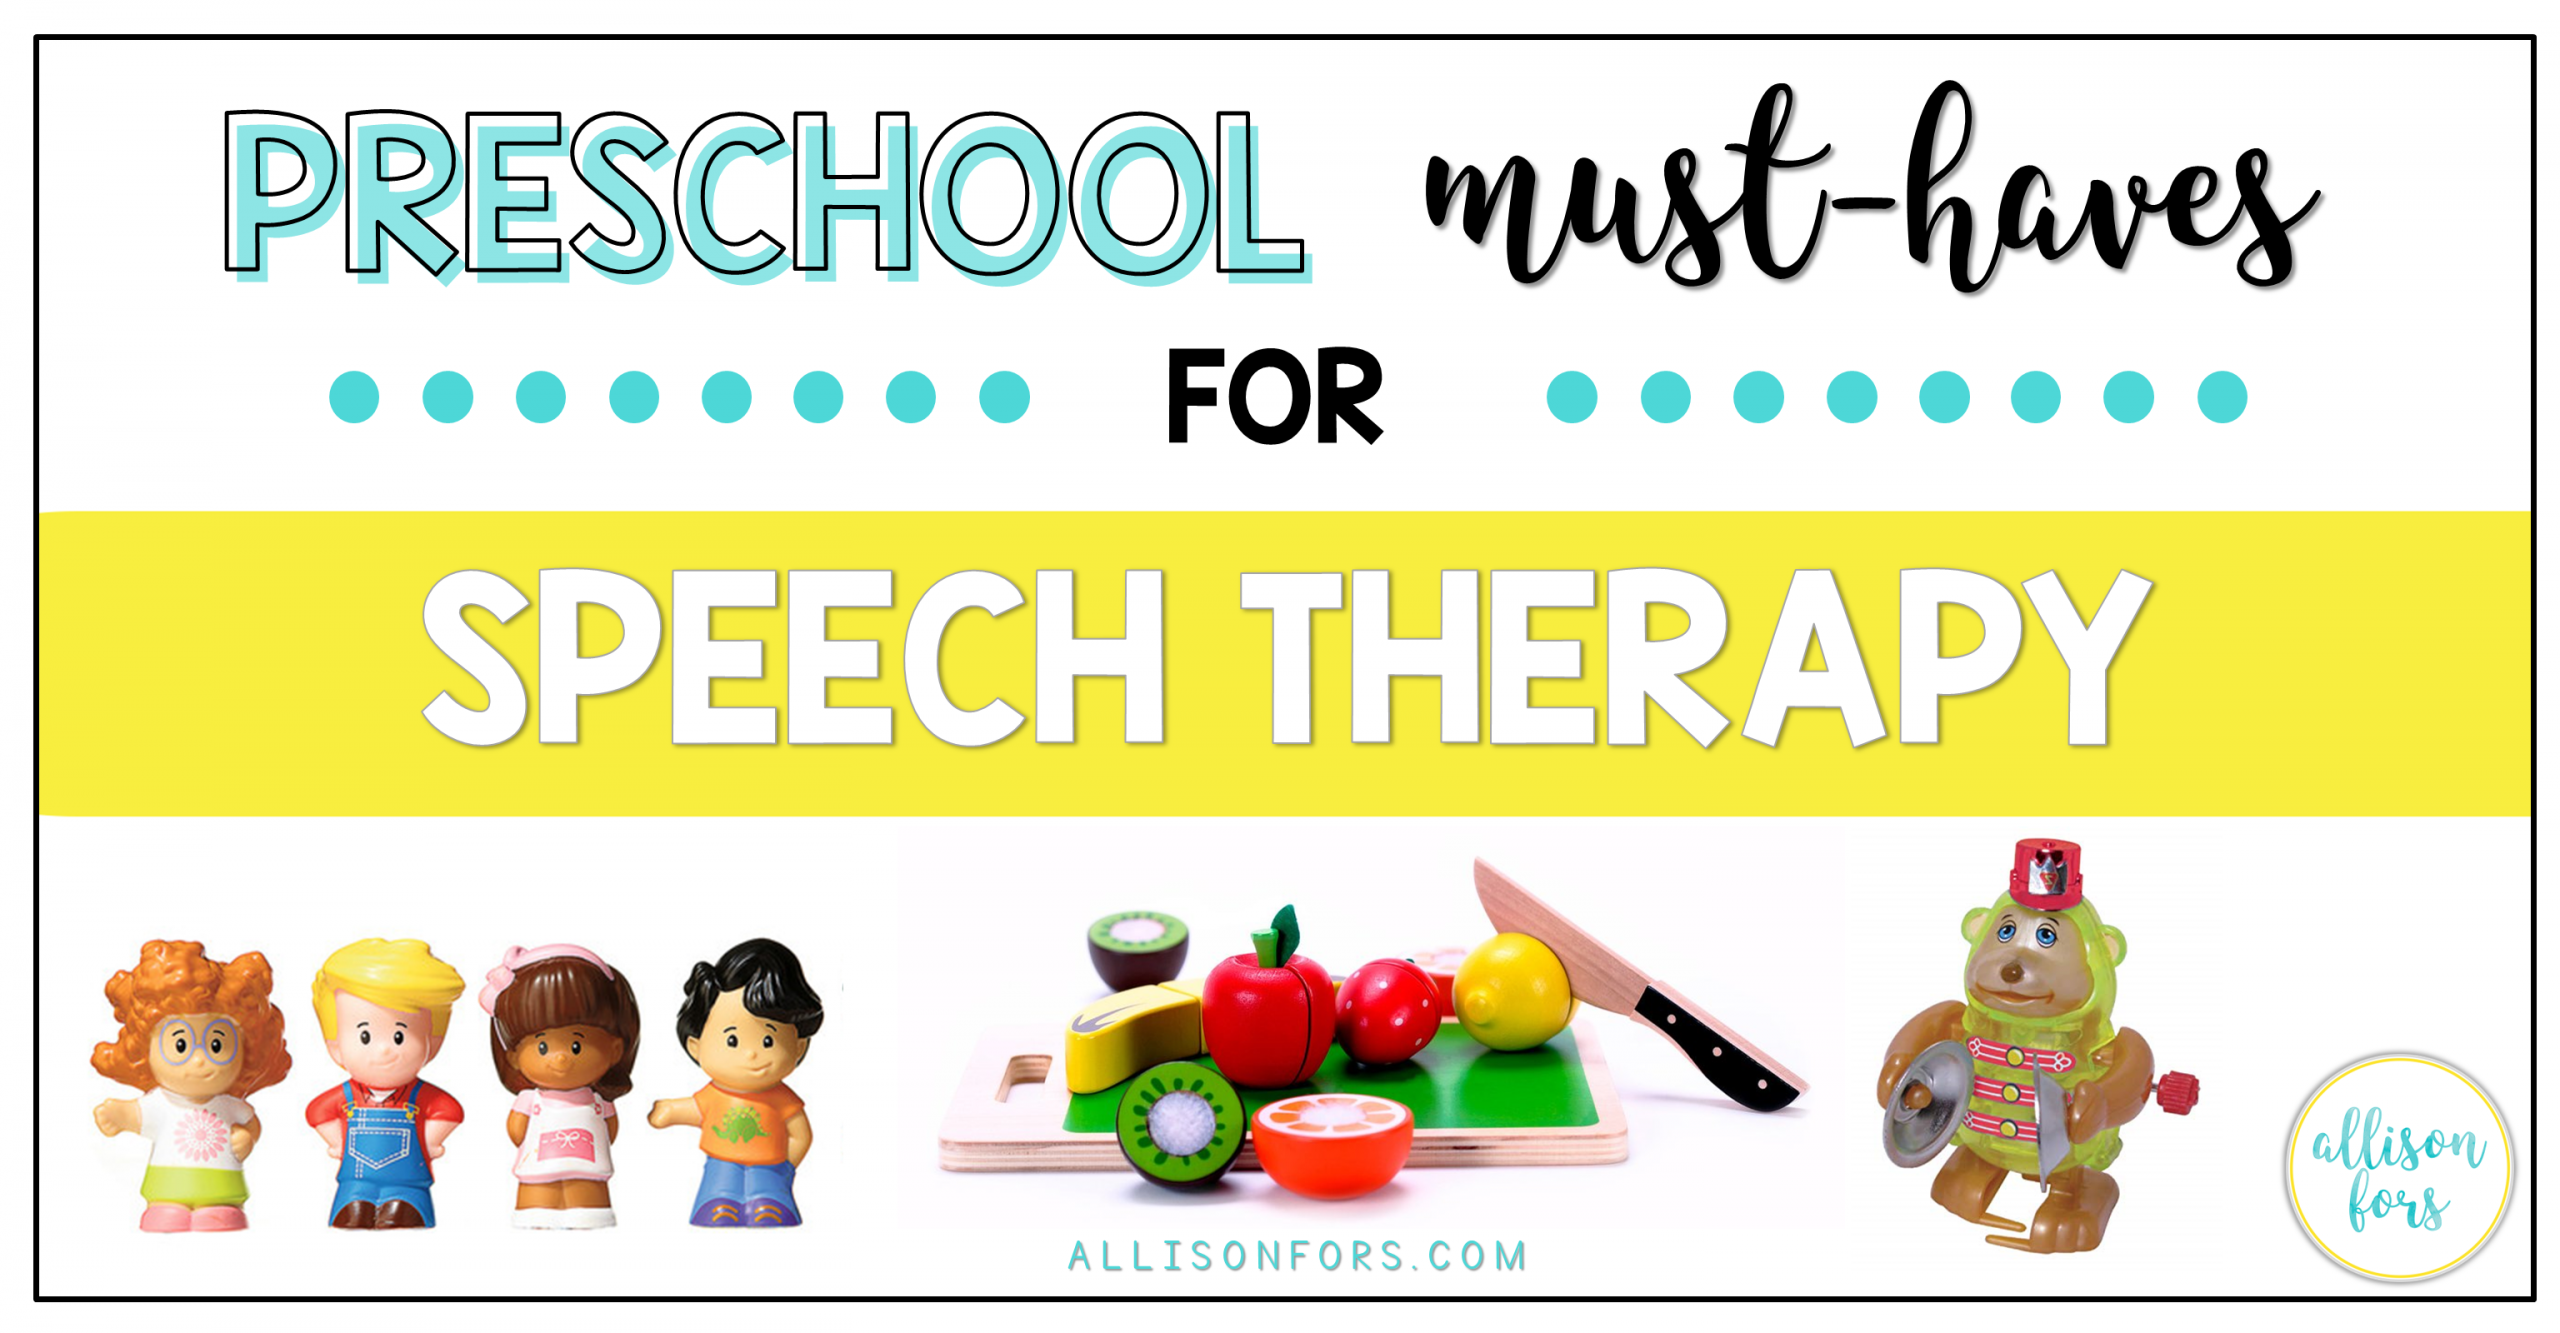 PreschoolMustHavesSpeechTherapy